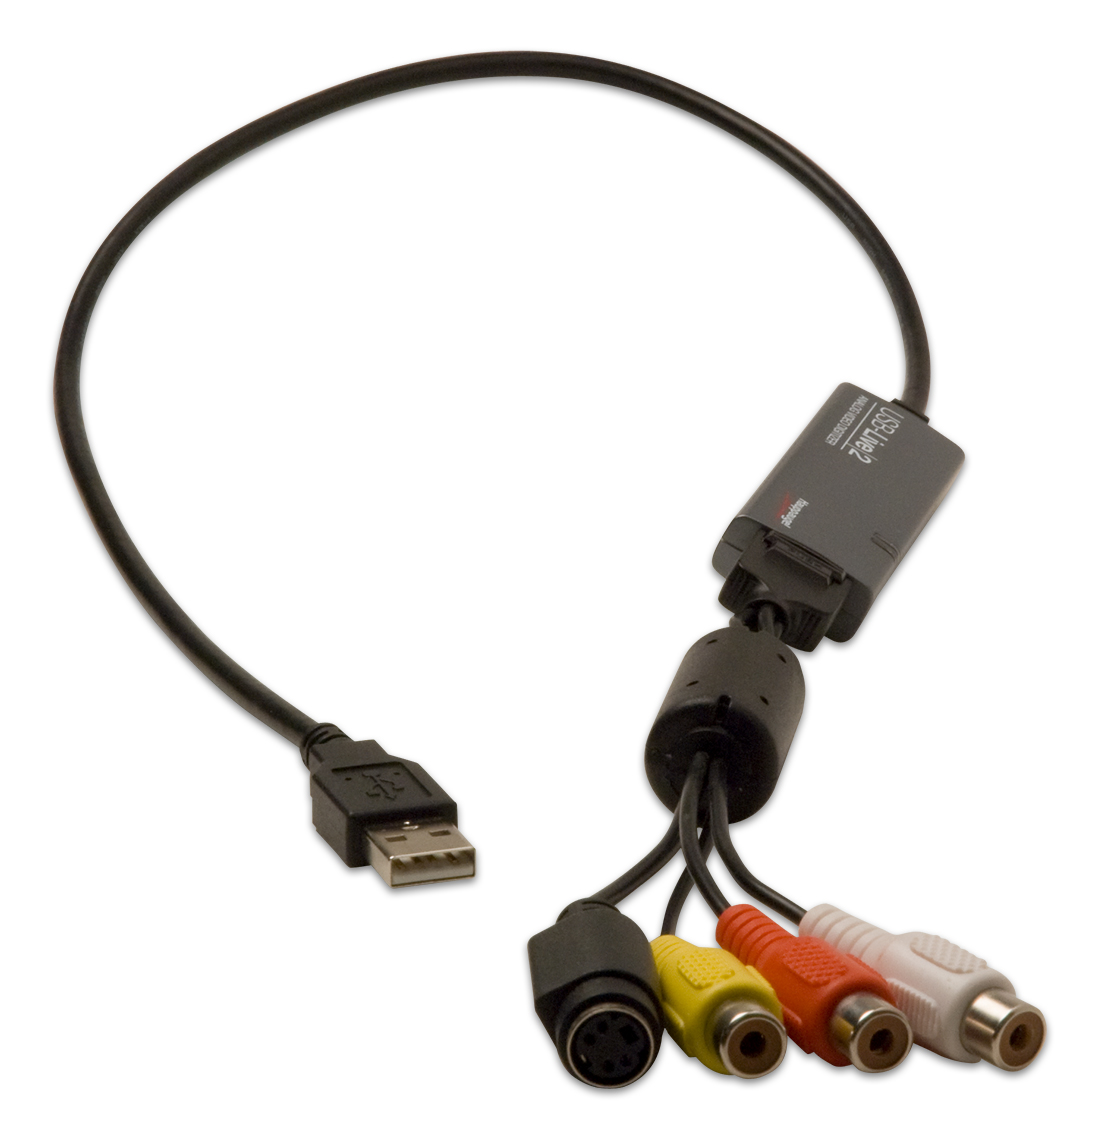 Hauppauge USB-Live2 Analog Video Digitizer, Black - image 2 of 2